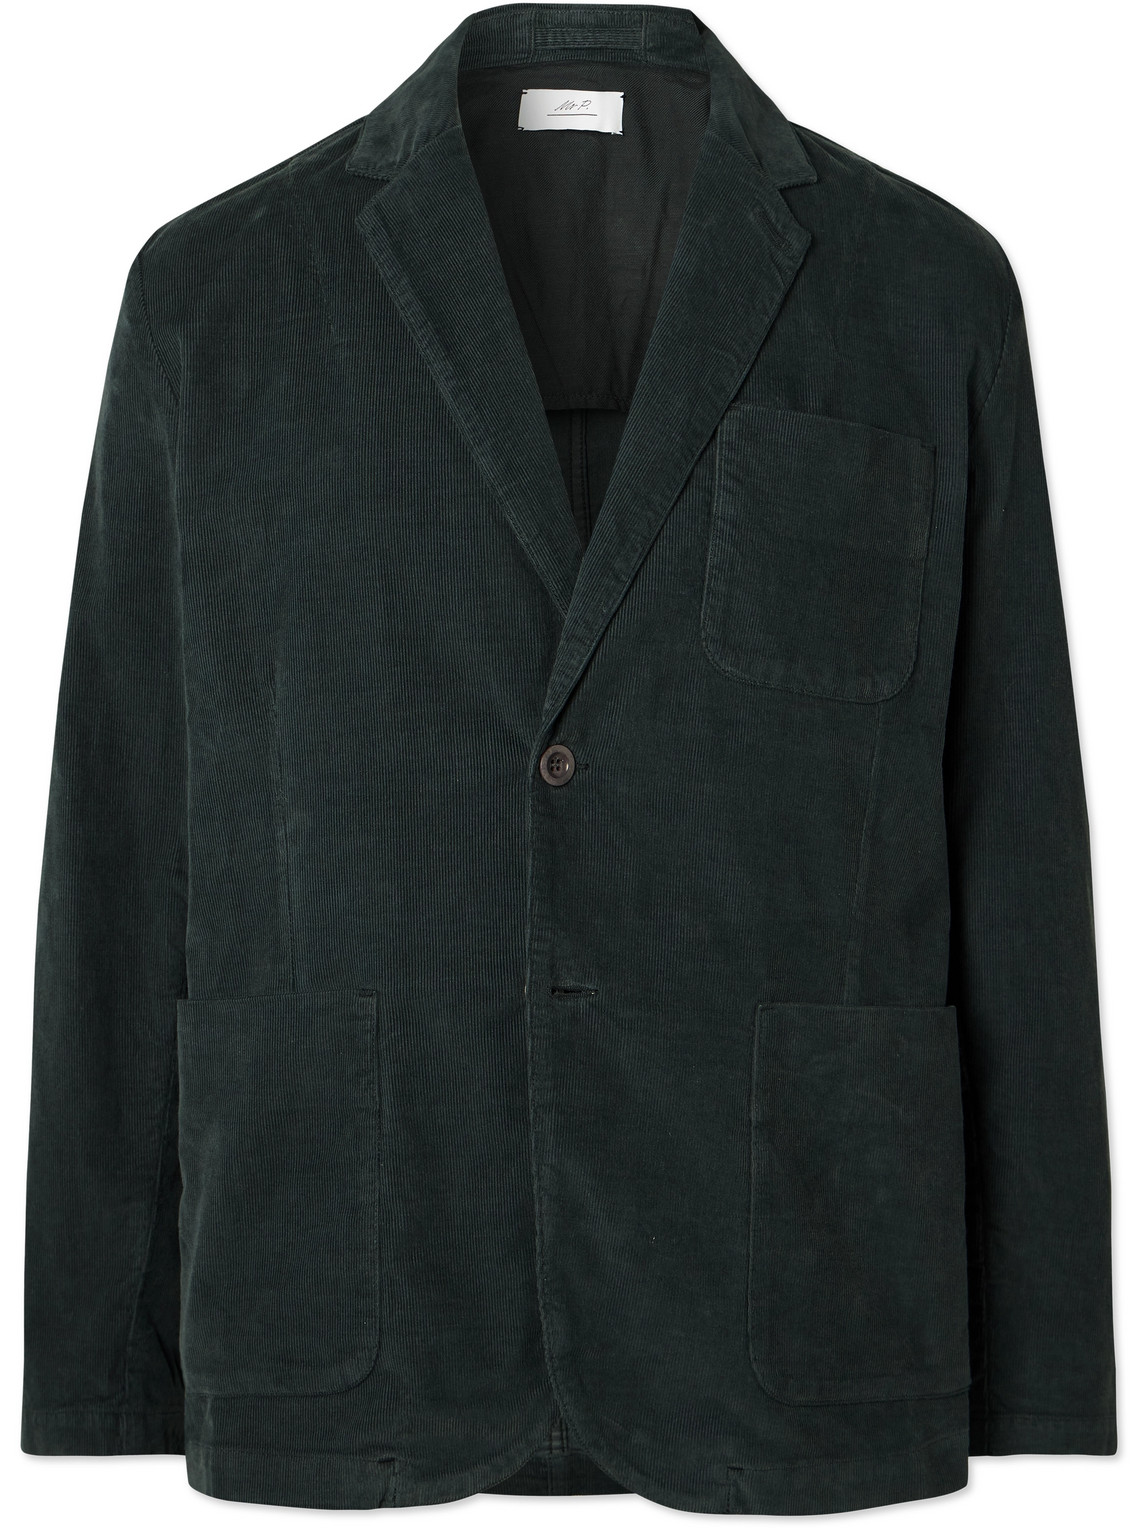 Mr P. - Garment-Dyed Stretch Organic Cotton-Needlecord Blazer - Men - Gray - XL von Mr P.